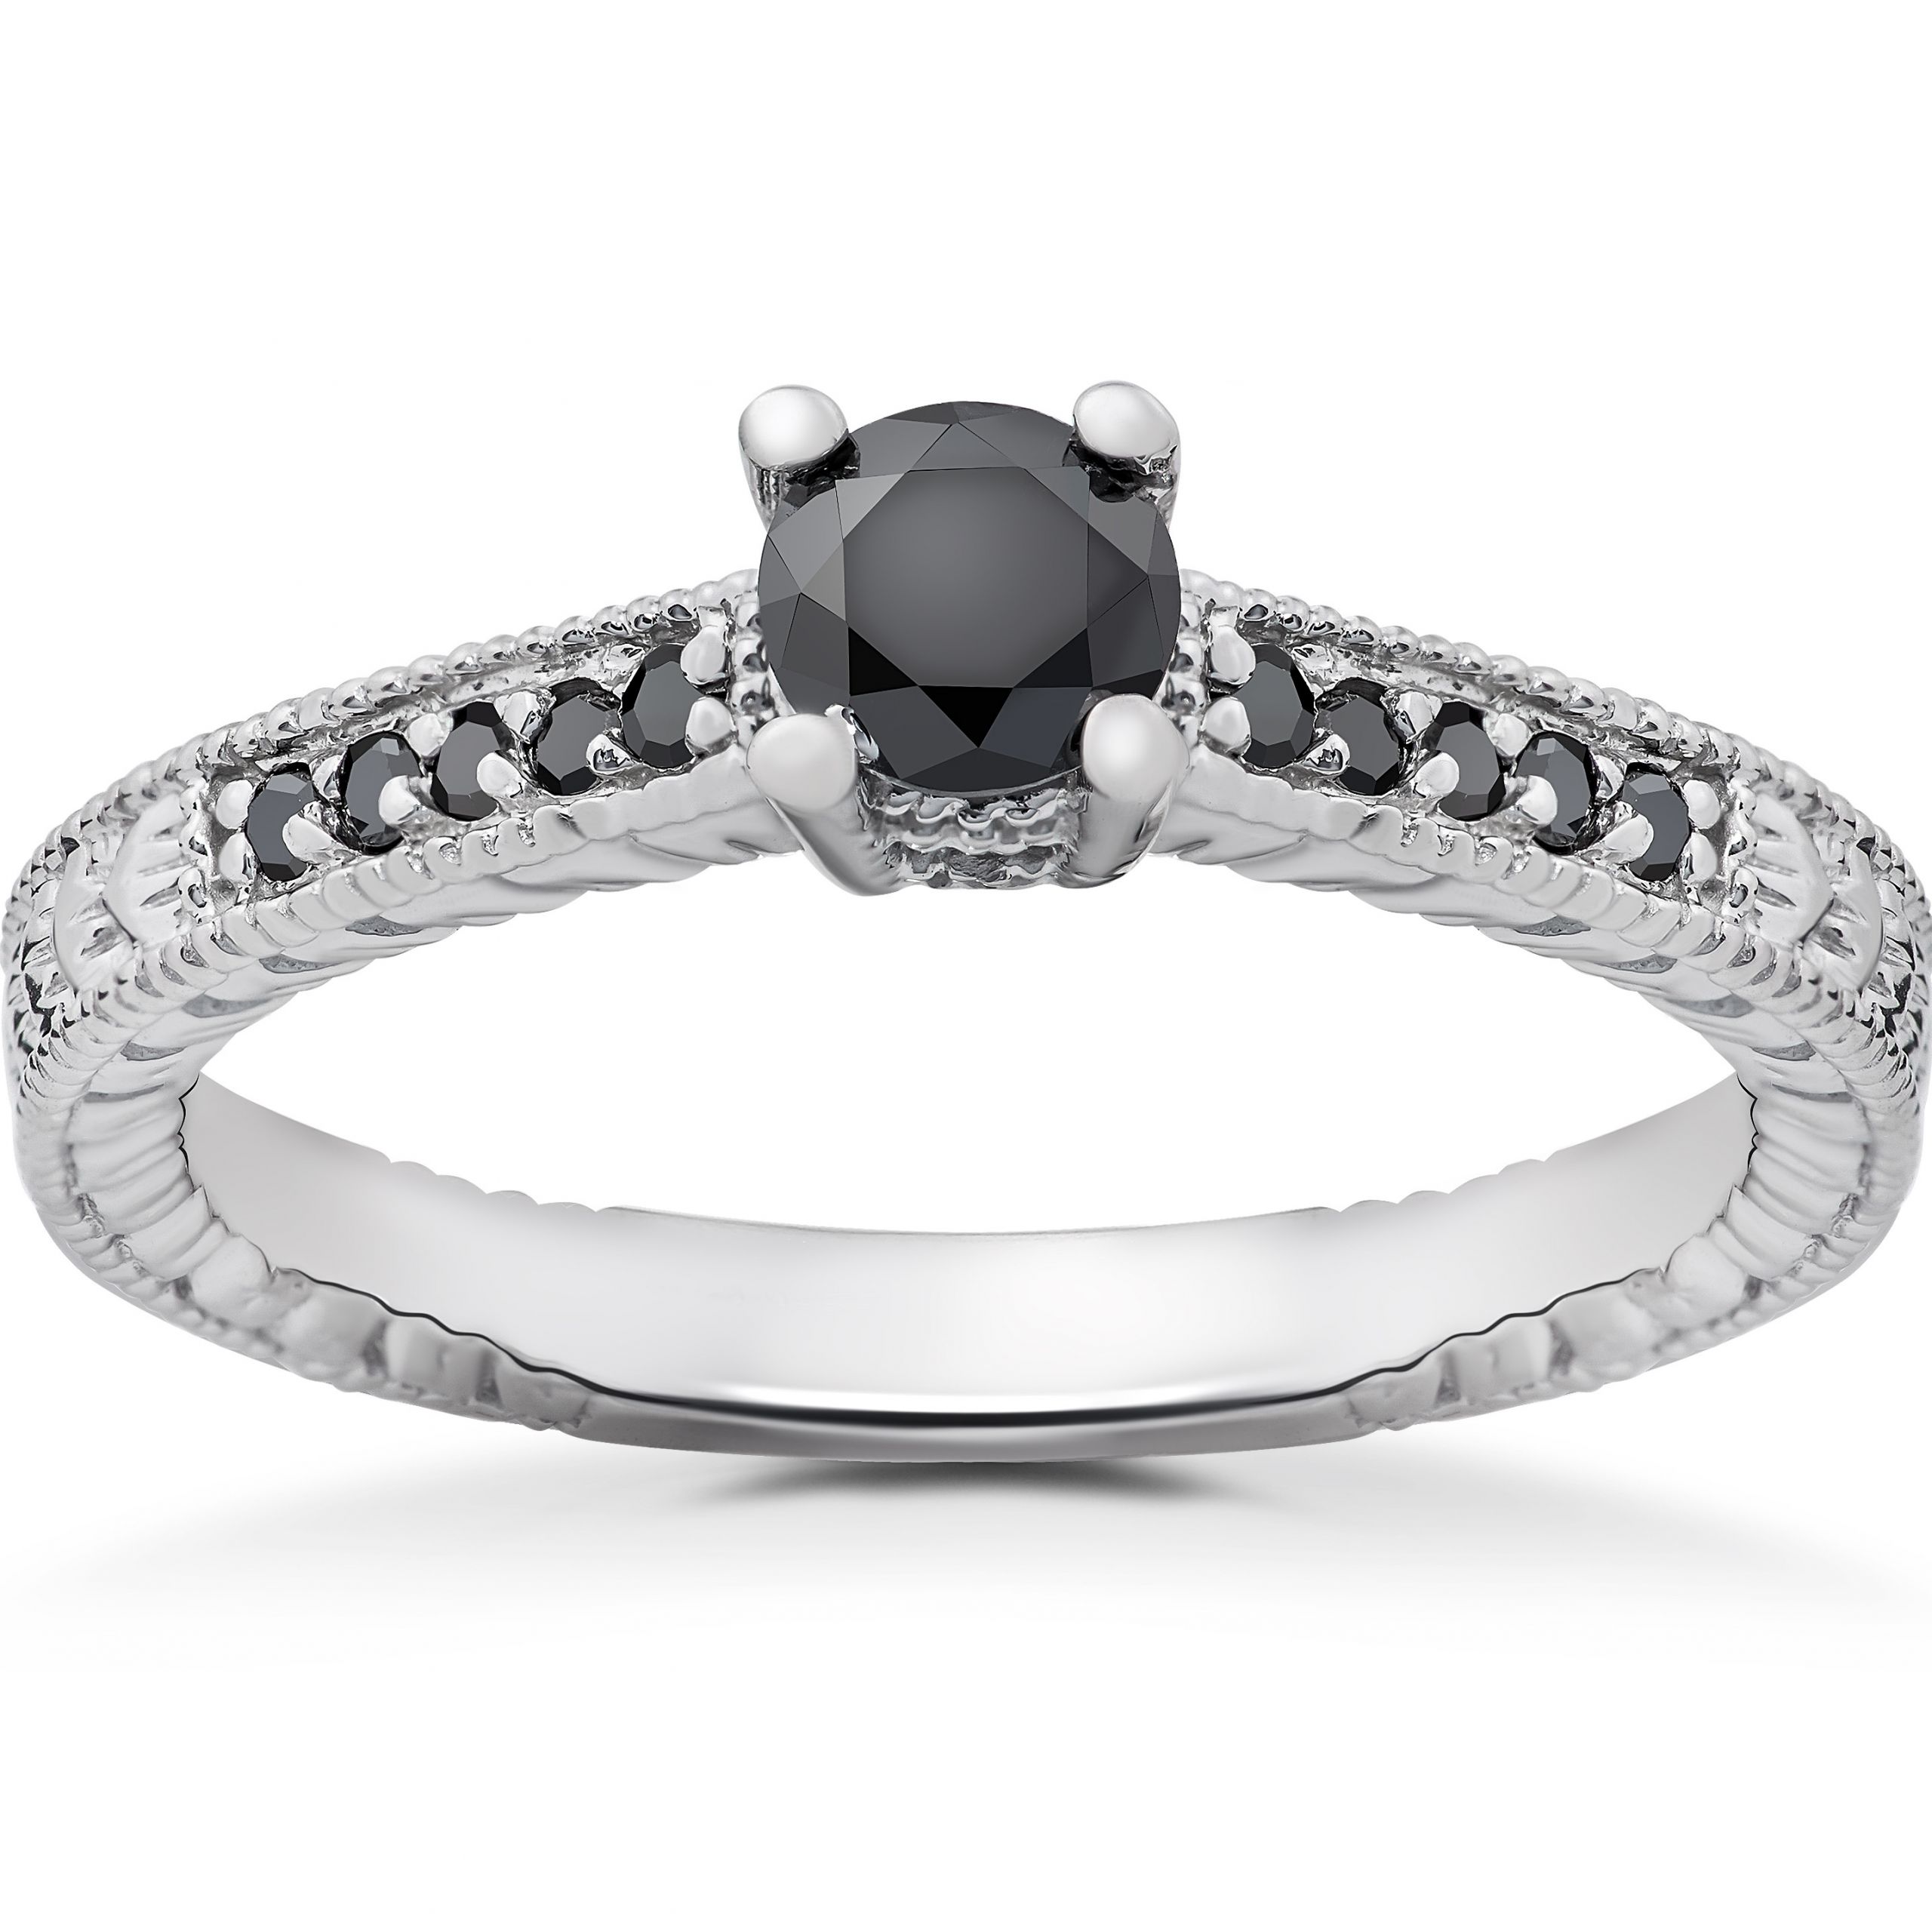 Vintage Black Diamond Engagement Rings
 1 2 ct Black Diamond Vintage Engagement Ring 14k White